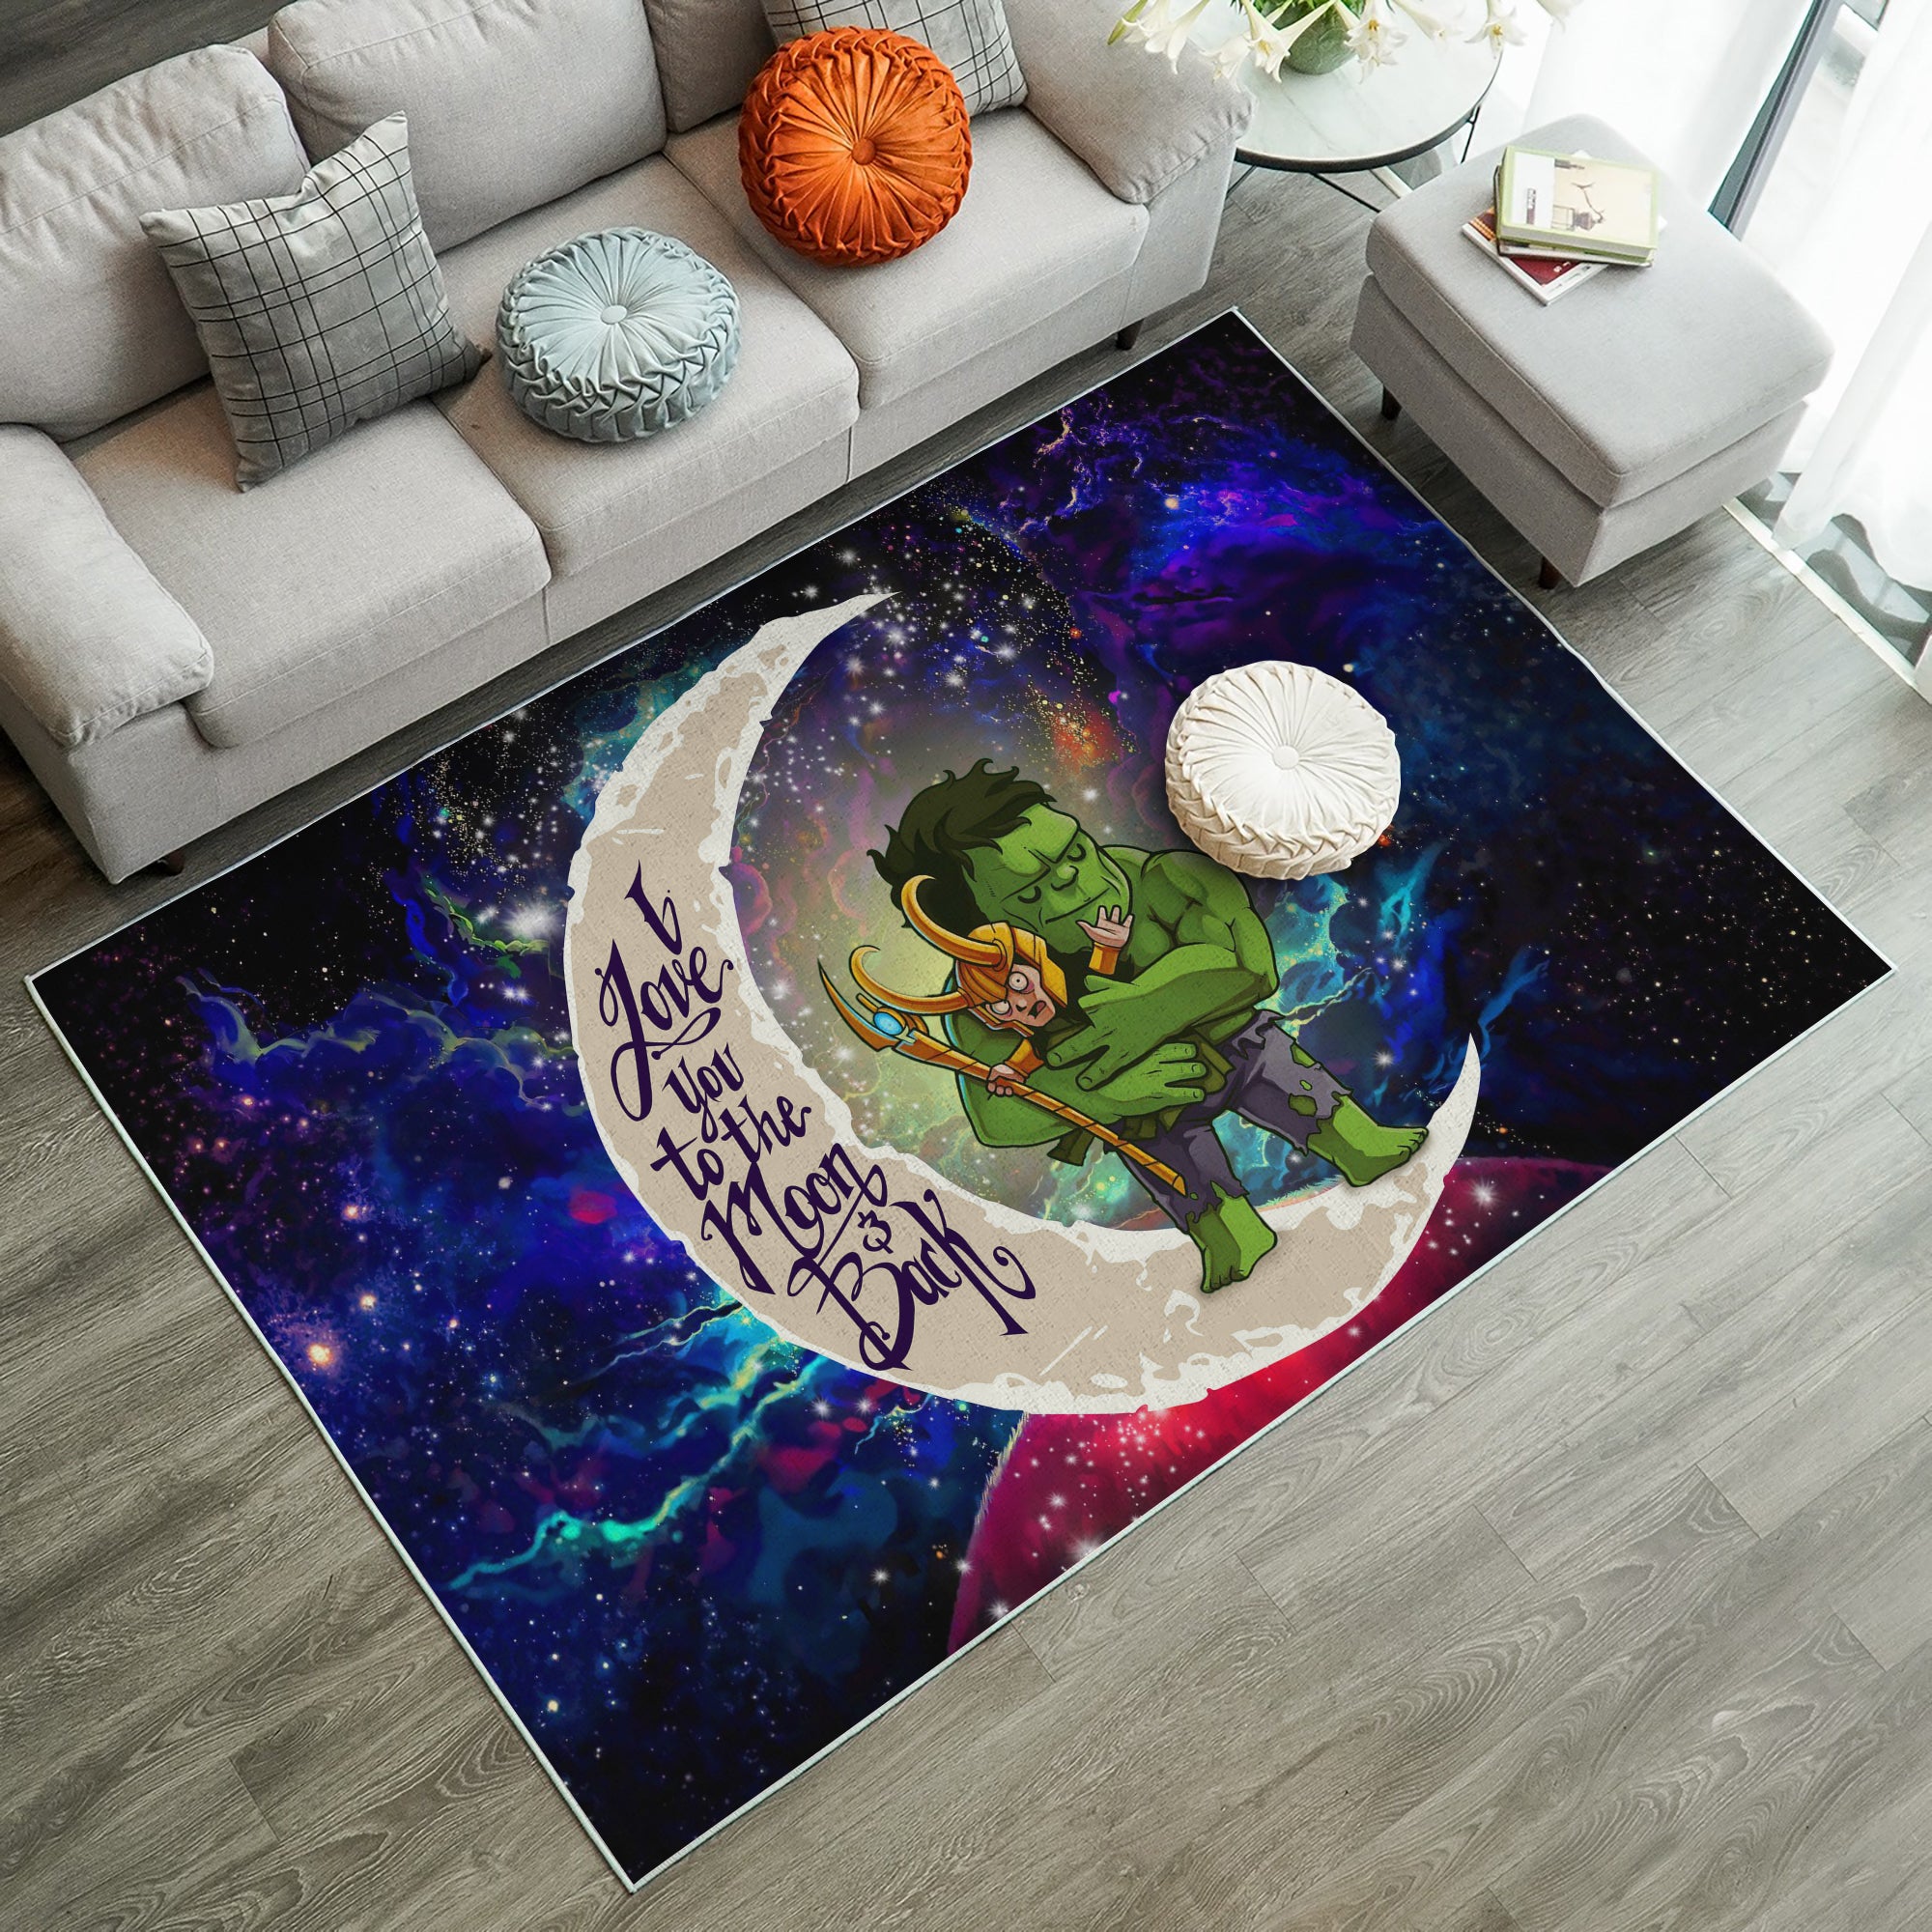 Hulk And Loki Love You To The Moon Galaxy Carpet Rug Home Room Decor